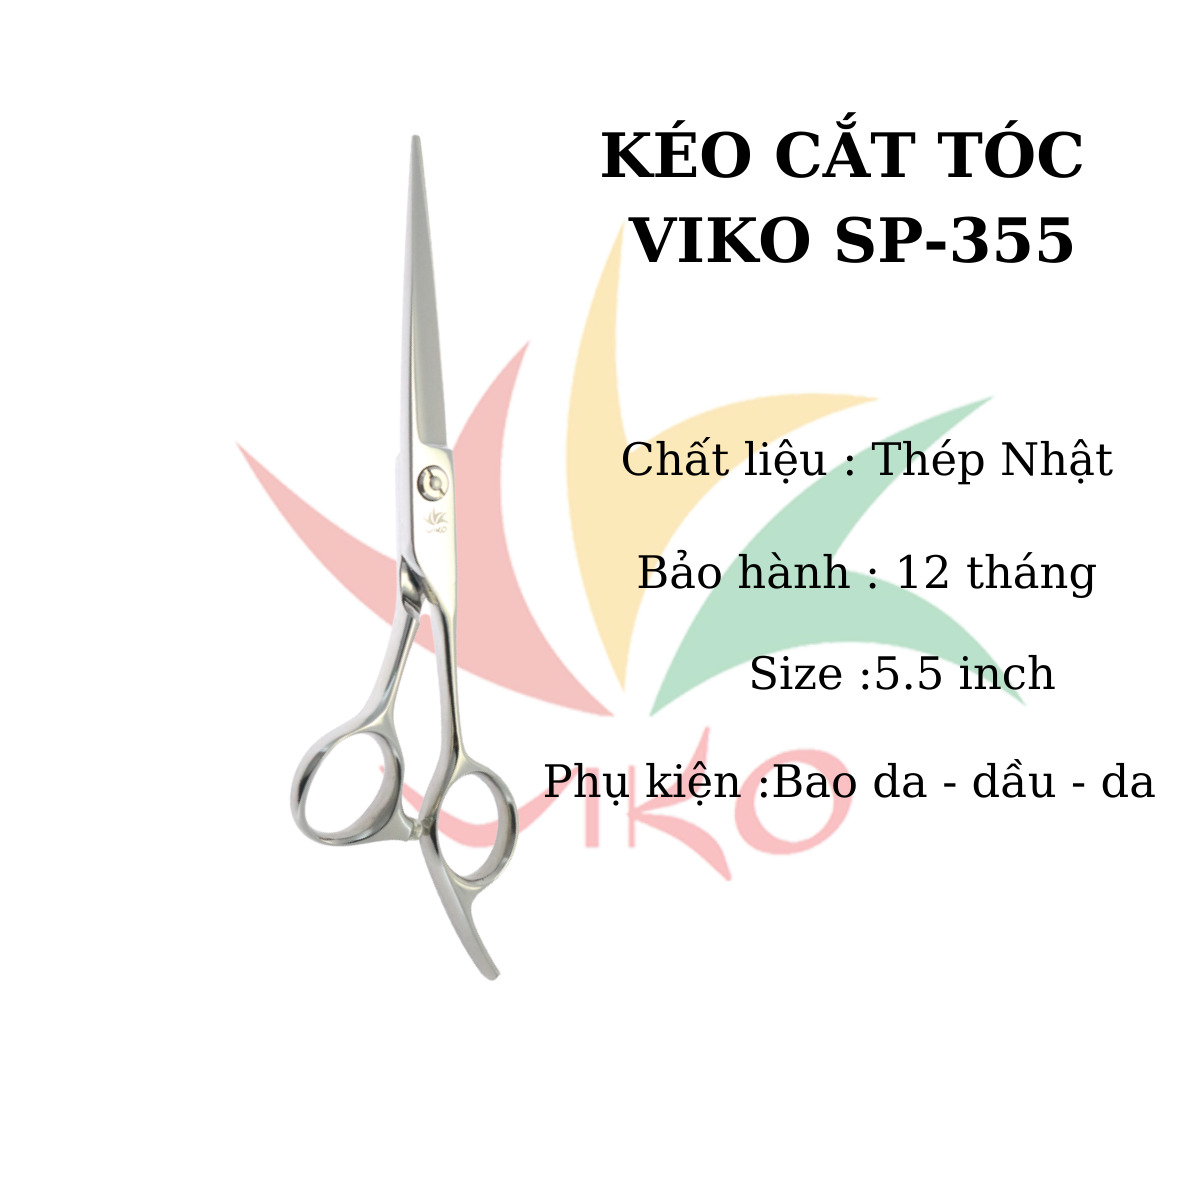 Kéo cắt tóc Viko SP-355